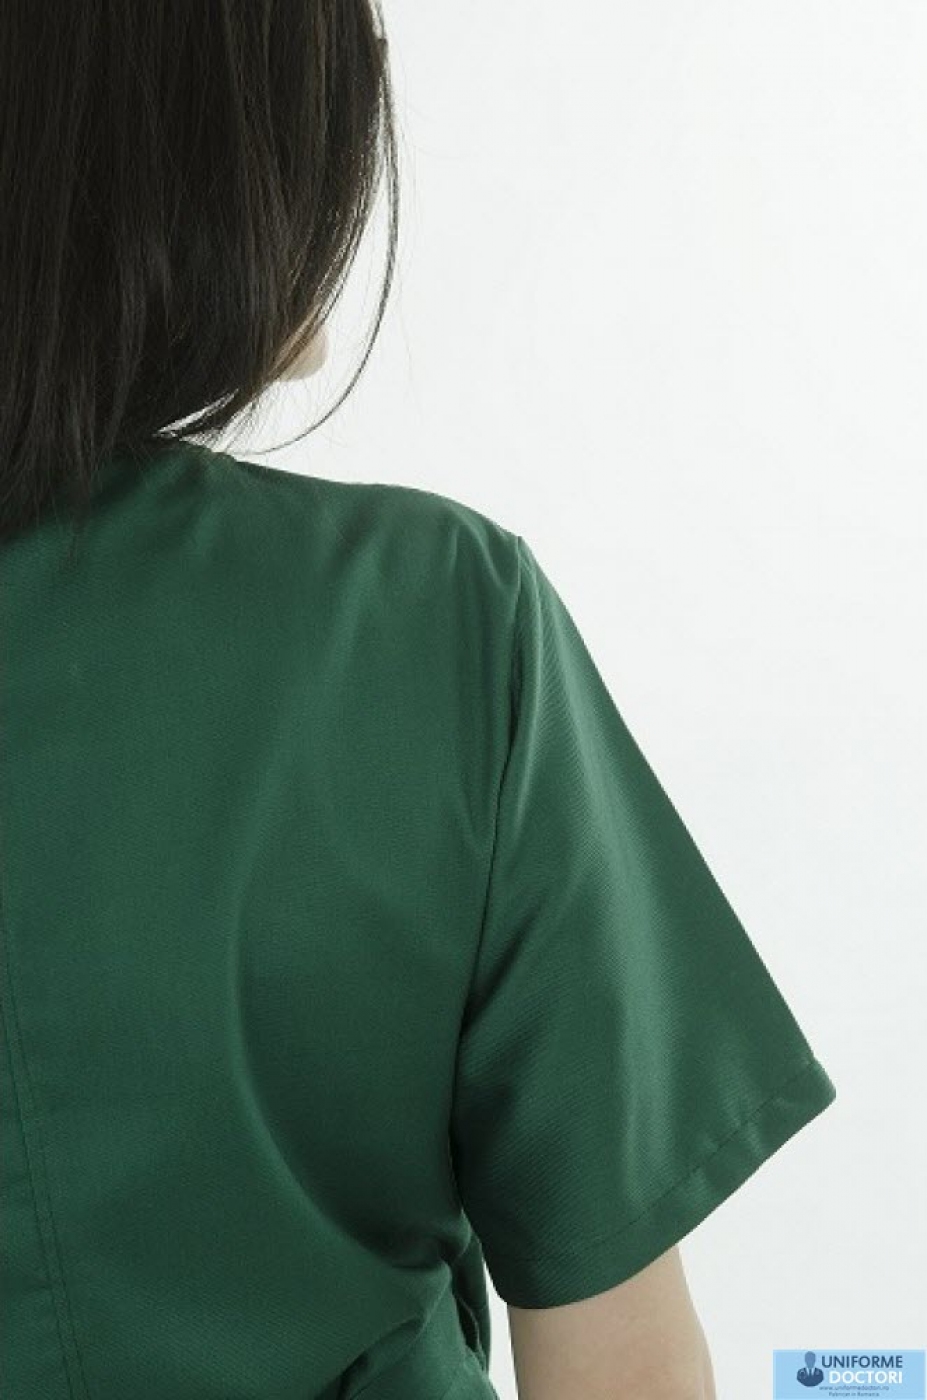 Uniforme medicale - Halat medical tip kimono, maneca scurta si cordon